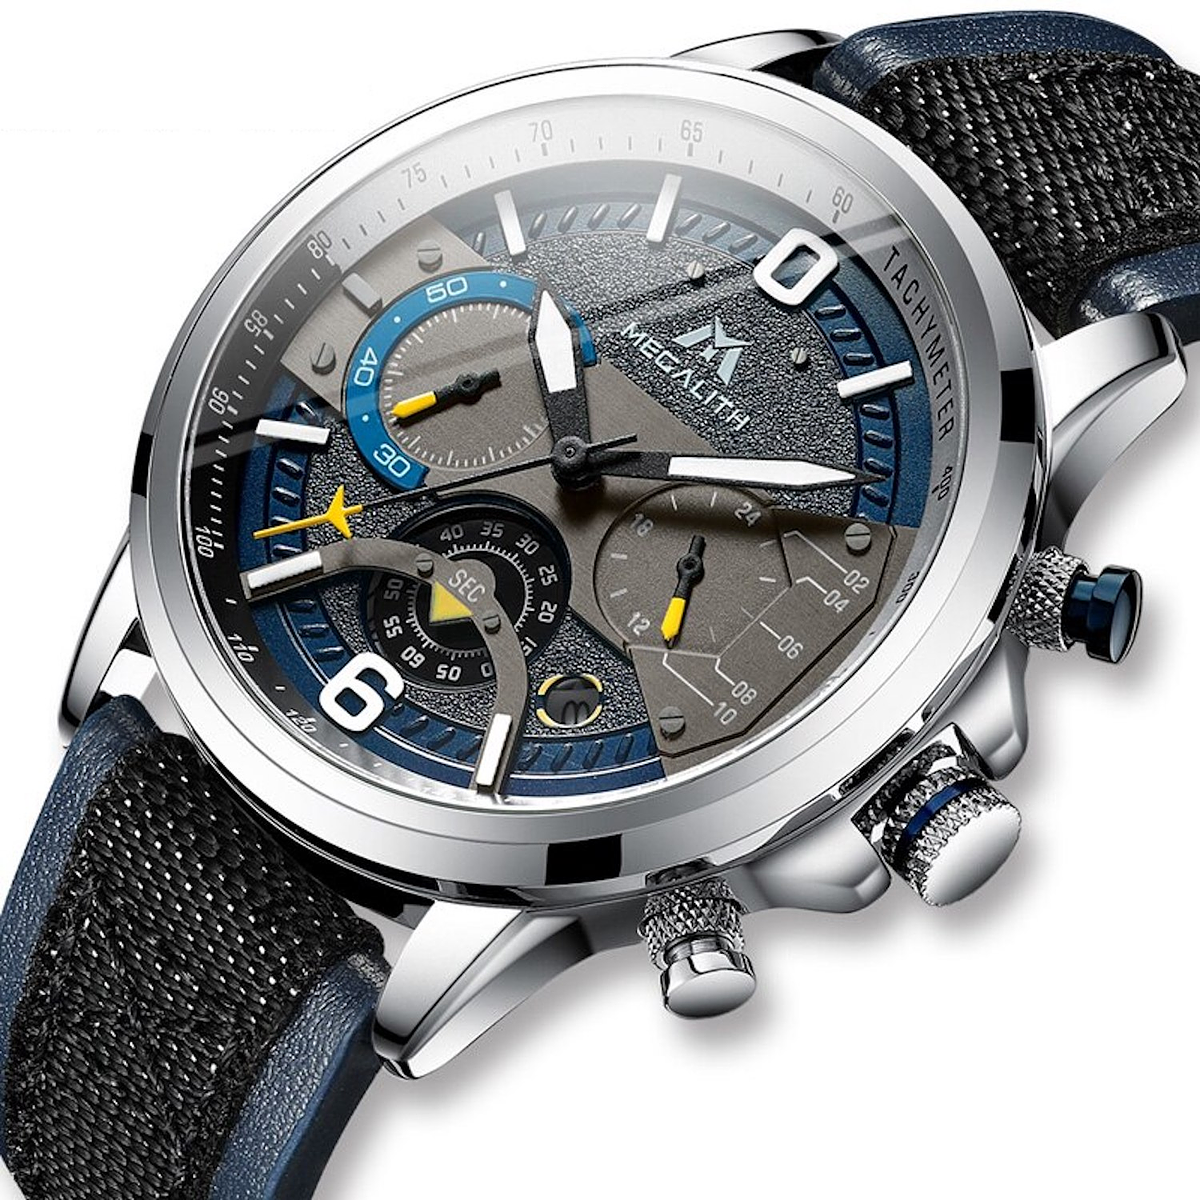 MEGALITH Relojes Hombre 46mm Designer Reloj Cronografo Cuarzo para